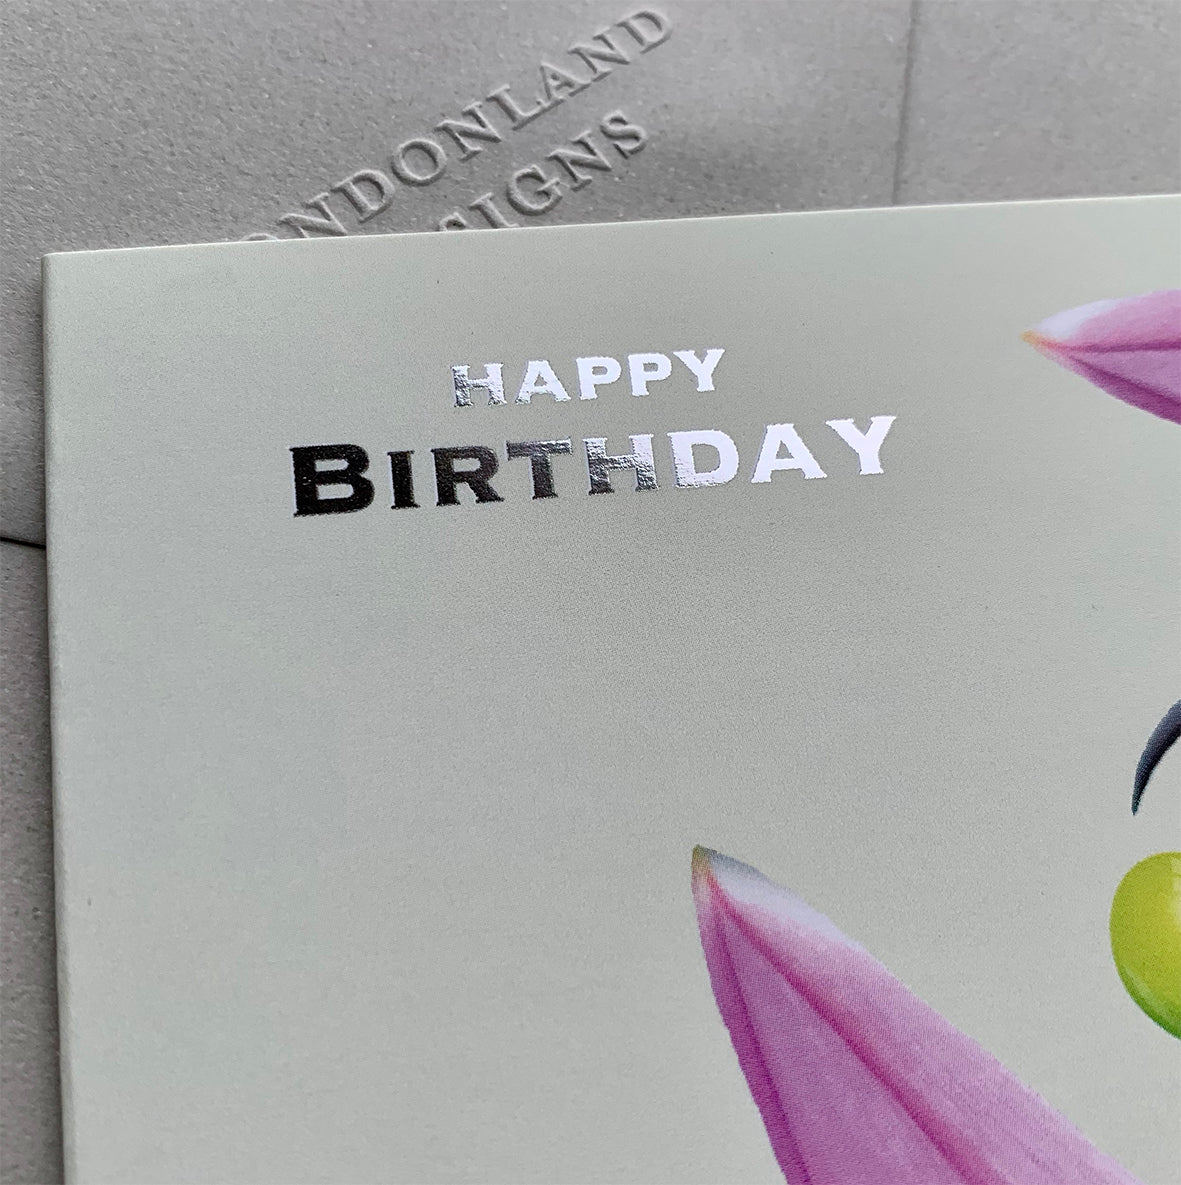 Hummingbird Birthday silver foil greeting card by Londonland Designs